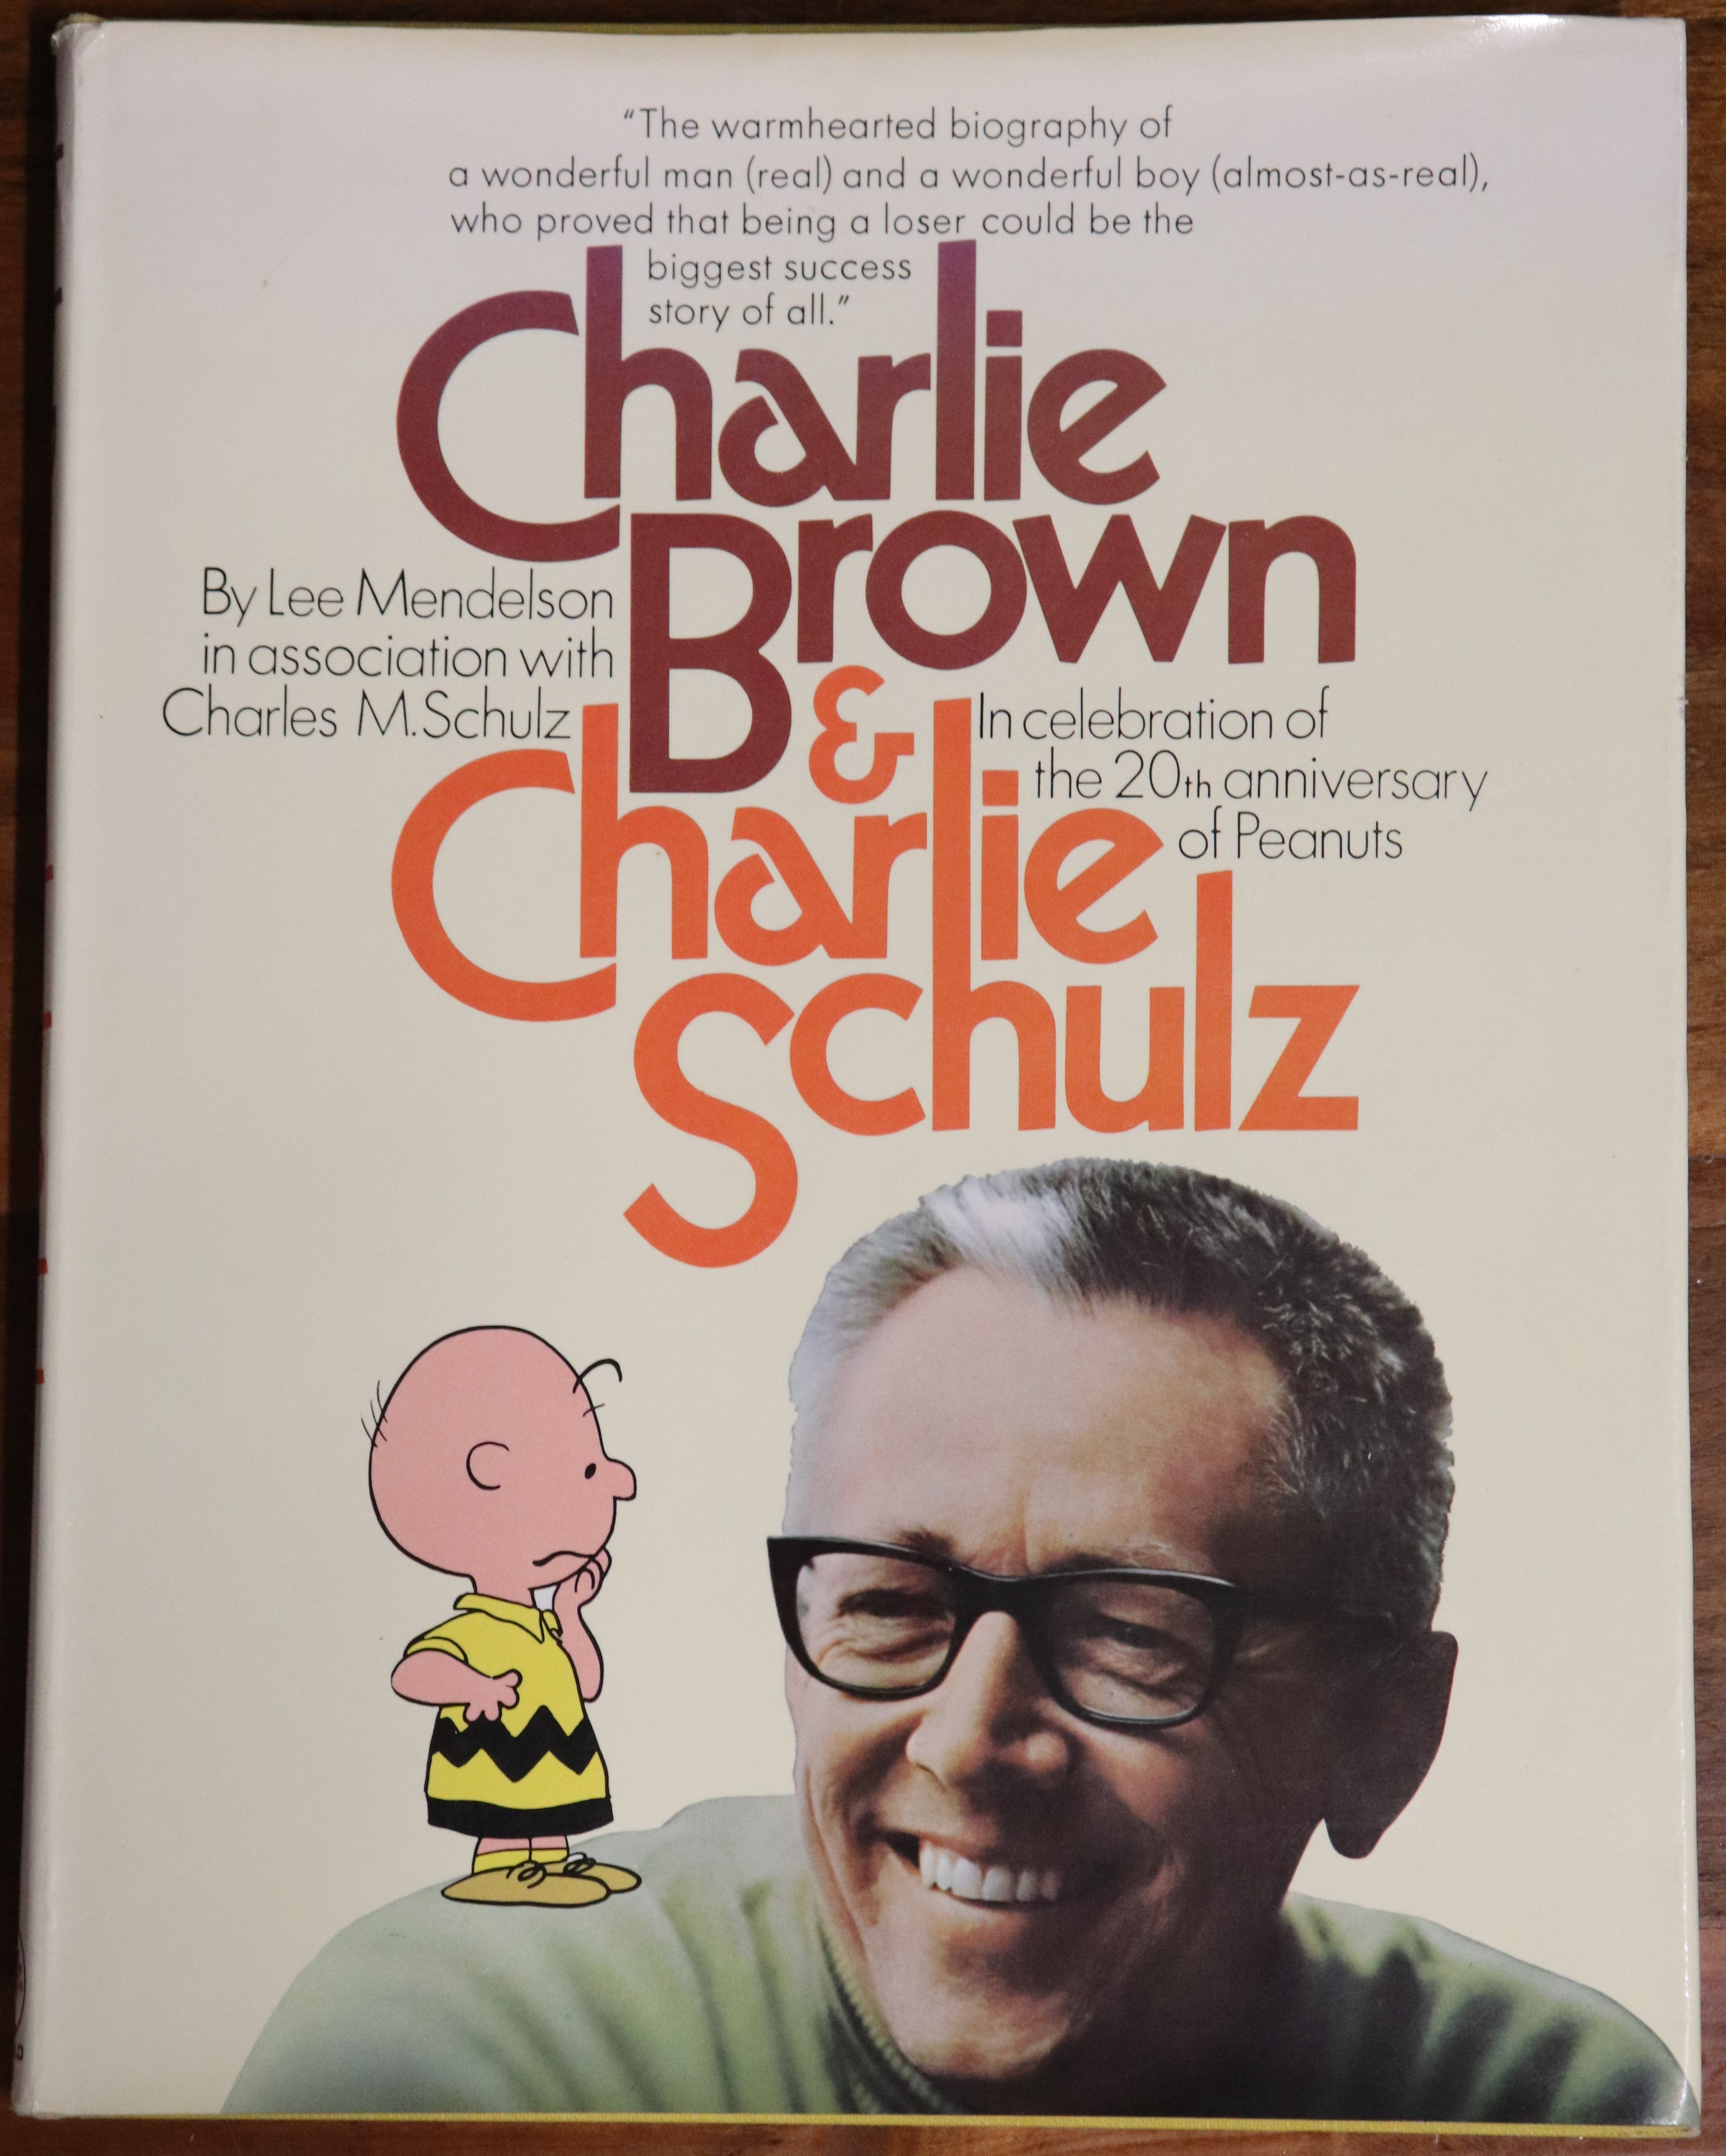 Charlie Brown & Charlie Schulz by L Mendelson - 1970 - Vintage Pop Culture Book